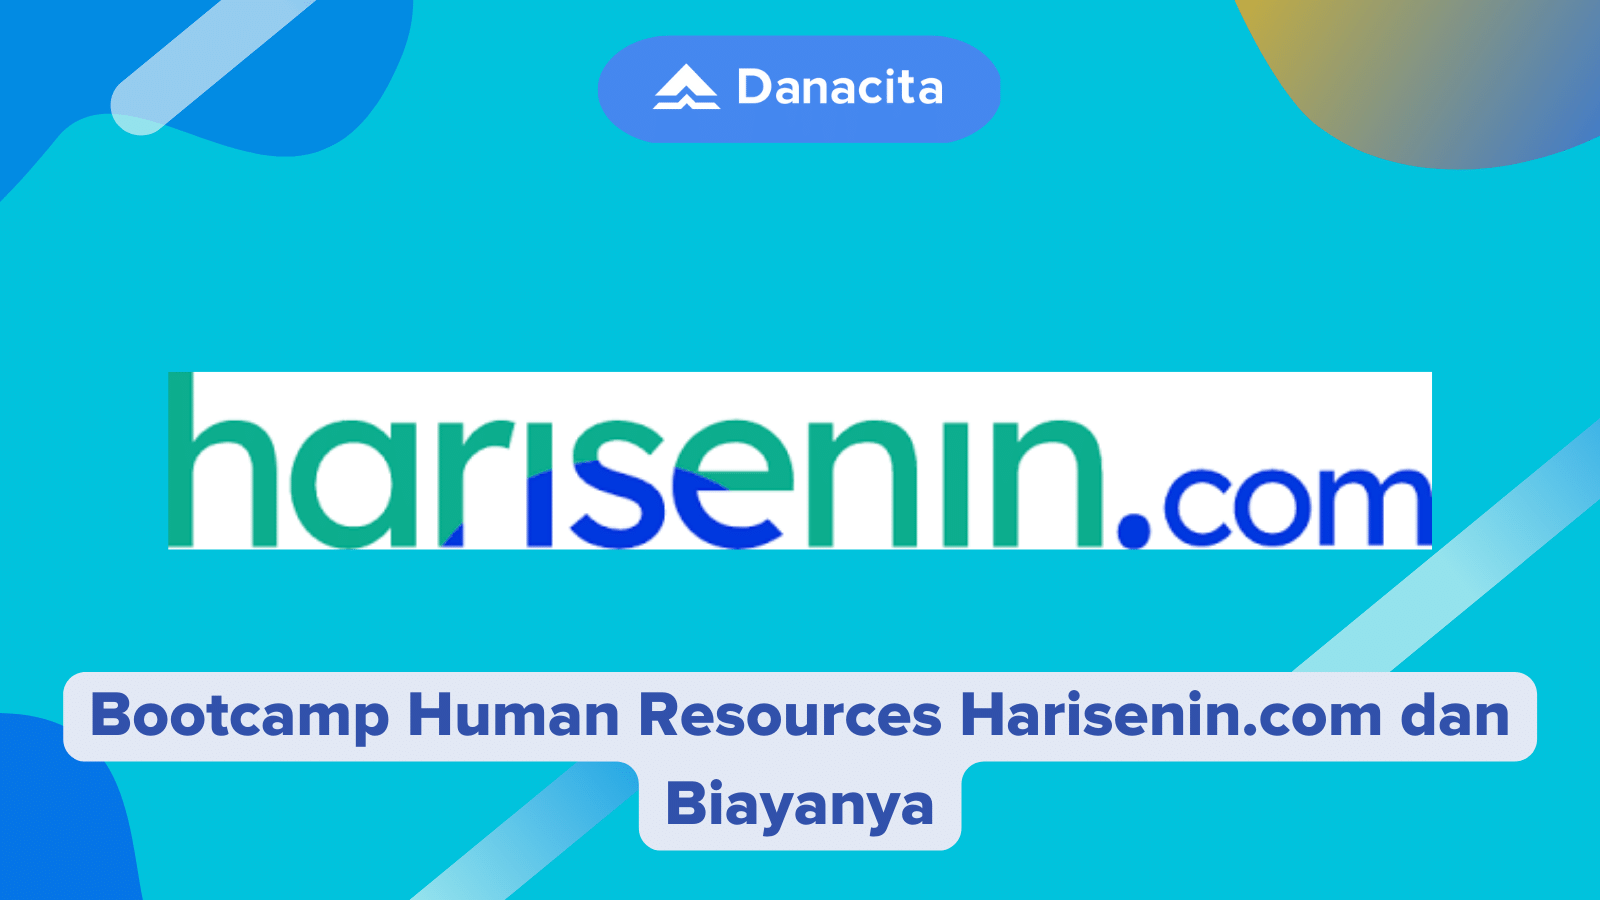 Bootcamp-Human-Resources-Harisenin-com